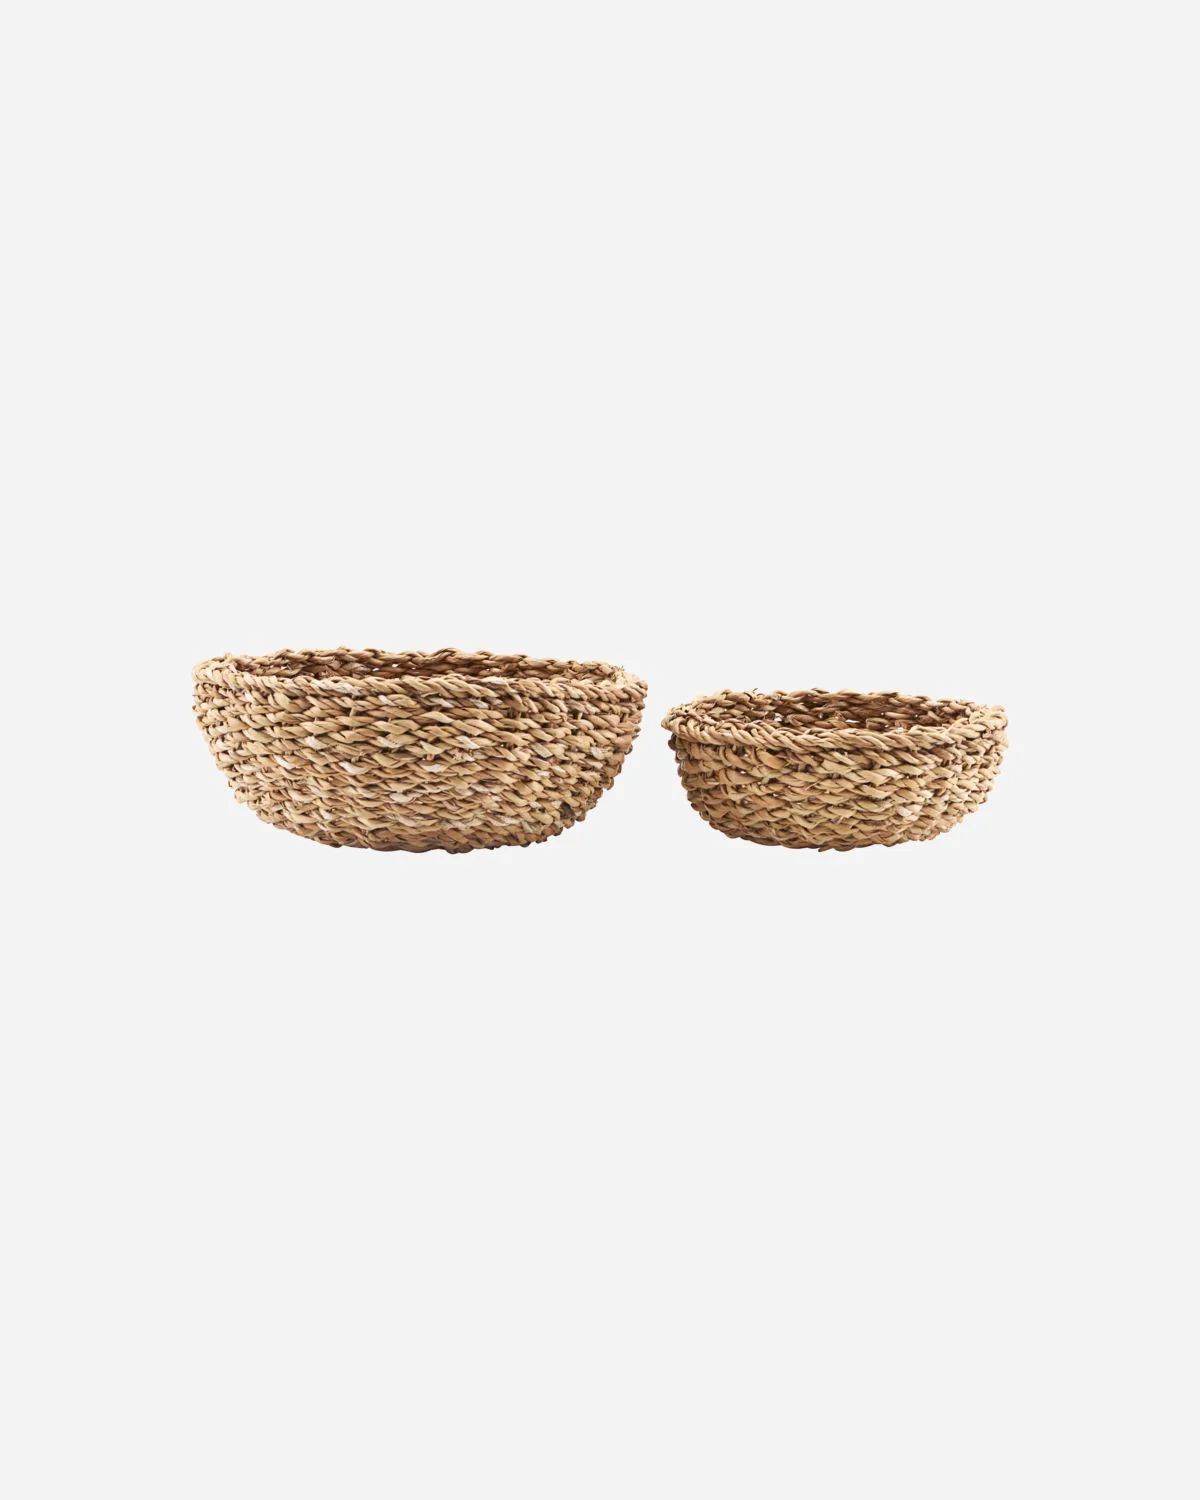 Bread Basket | Burke Decor